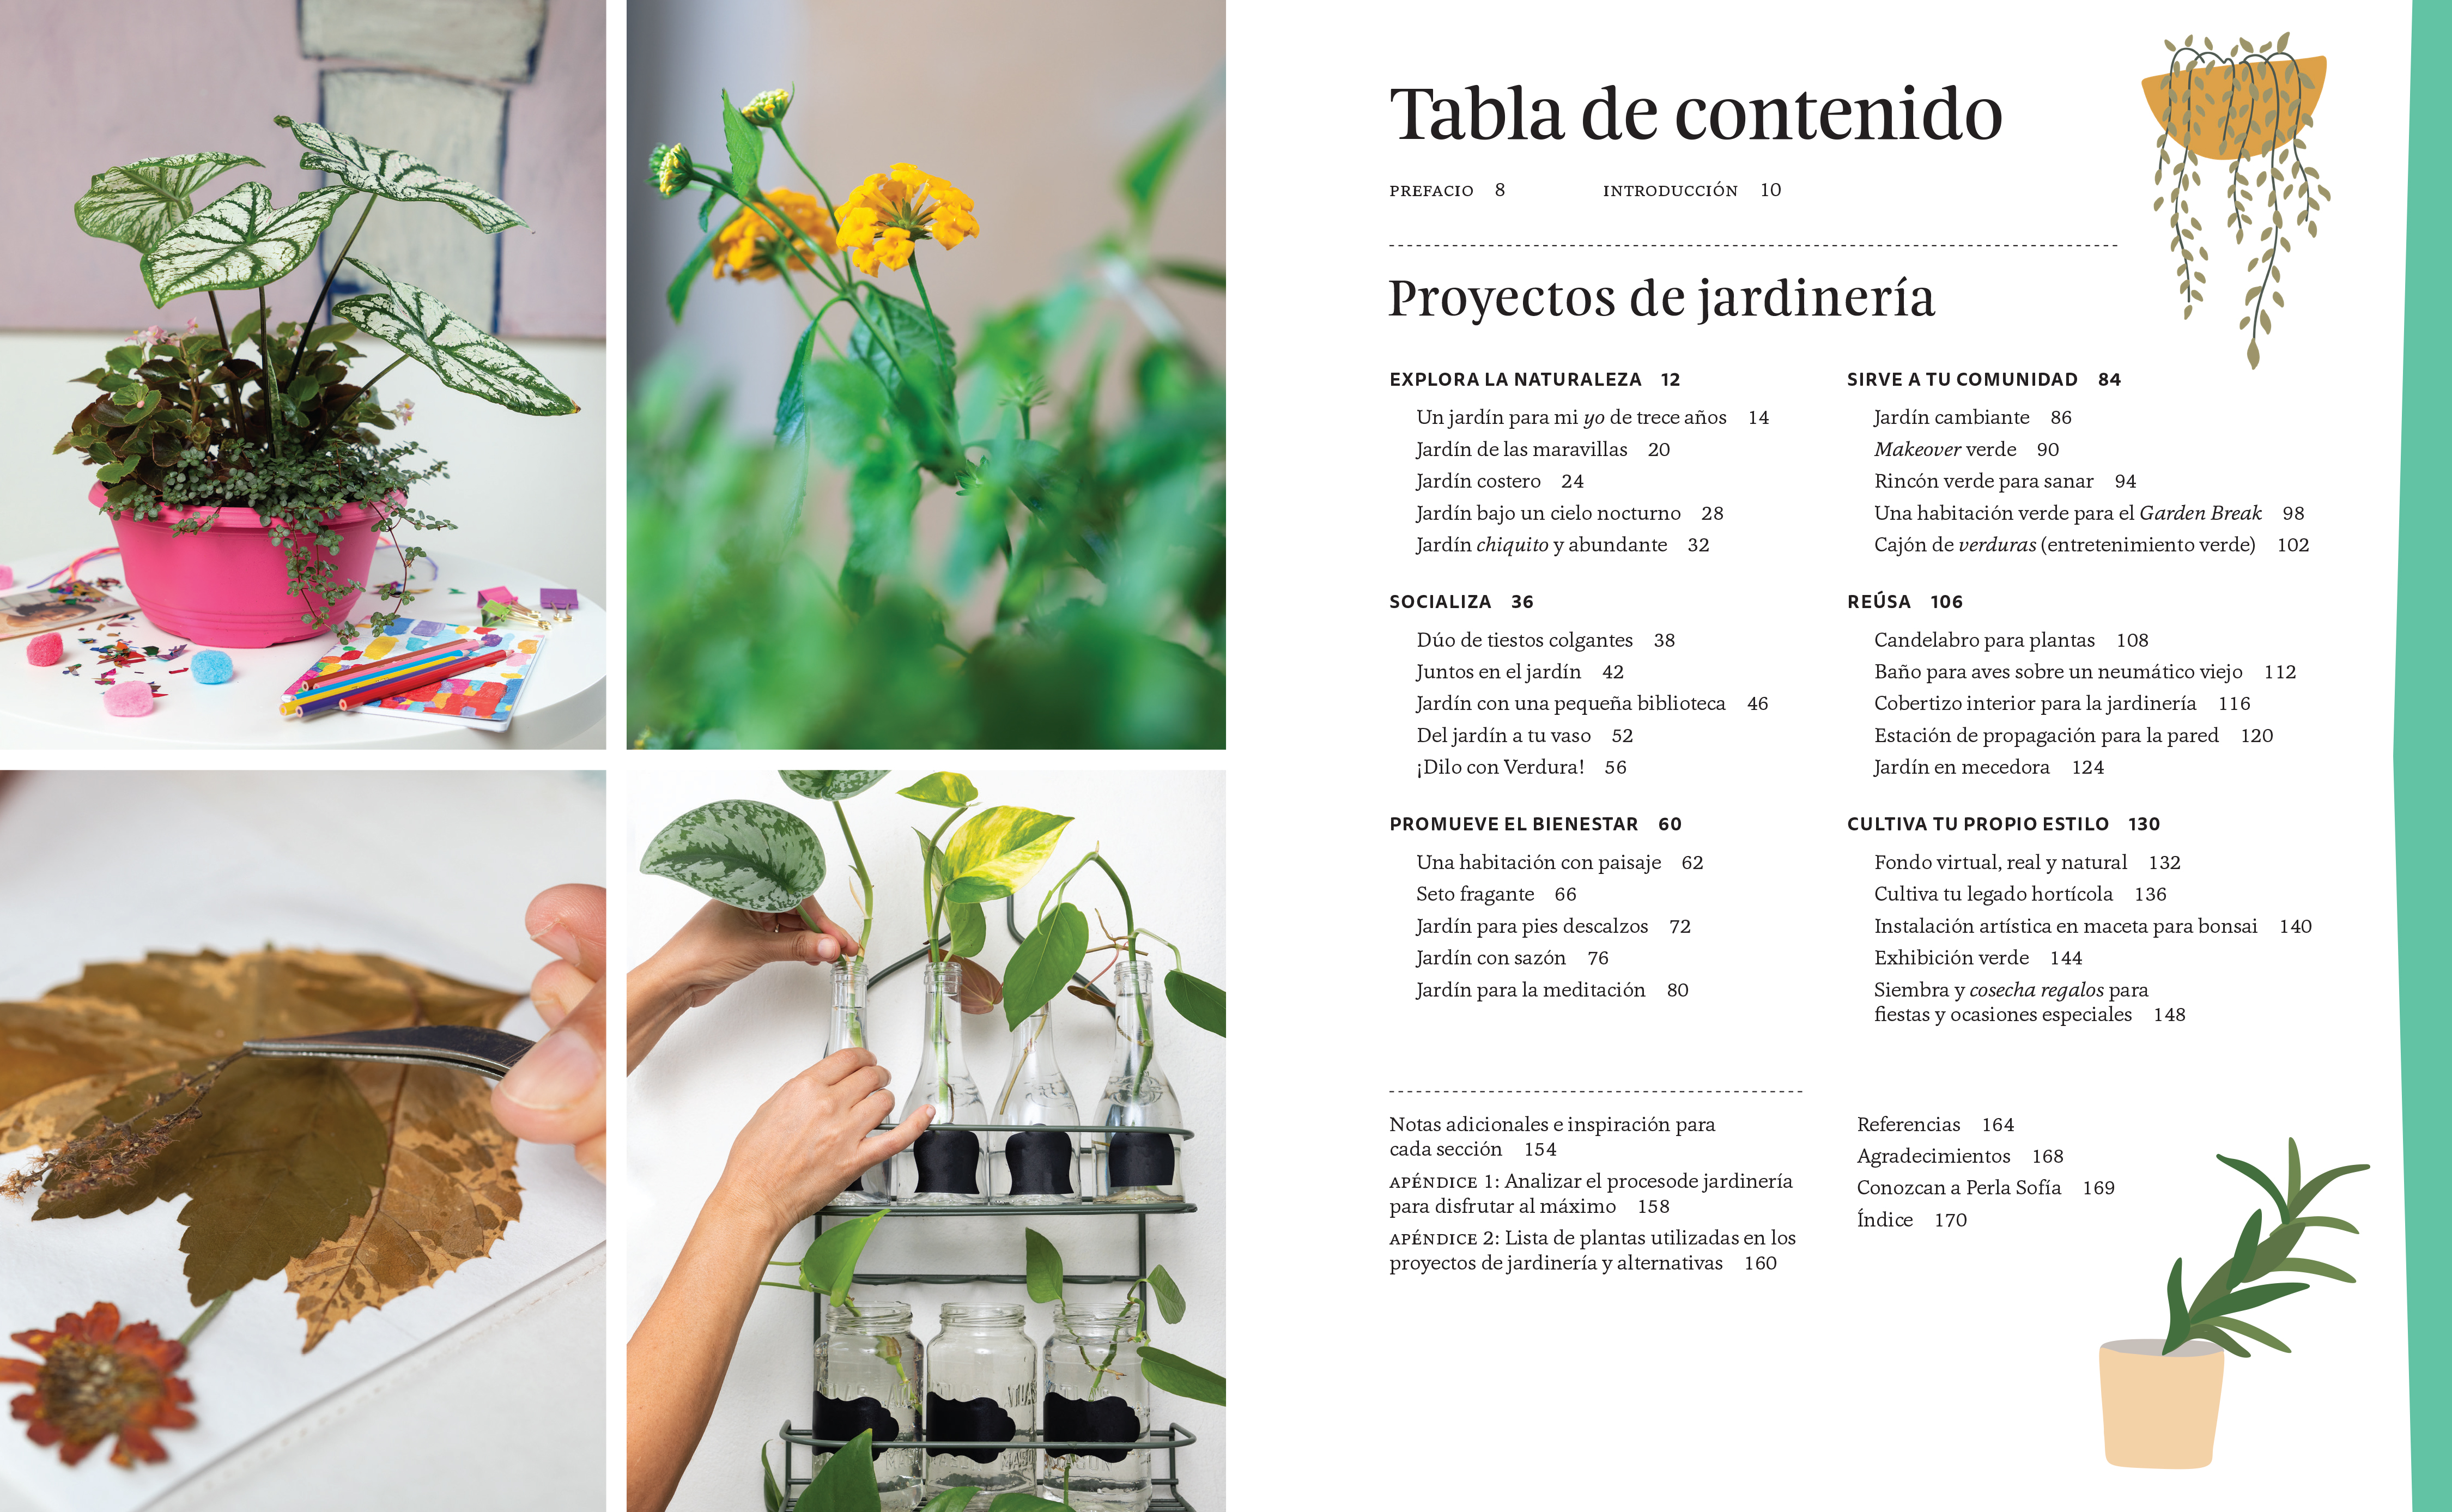 ¡Verdura! – Jardinería para tu bienestar / ¡Verdura! – Living a Garden Life (Spanish Edition)